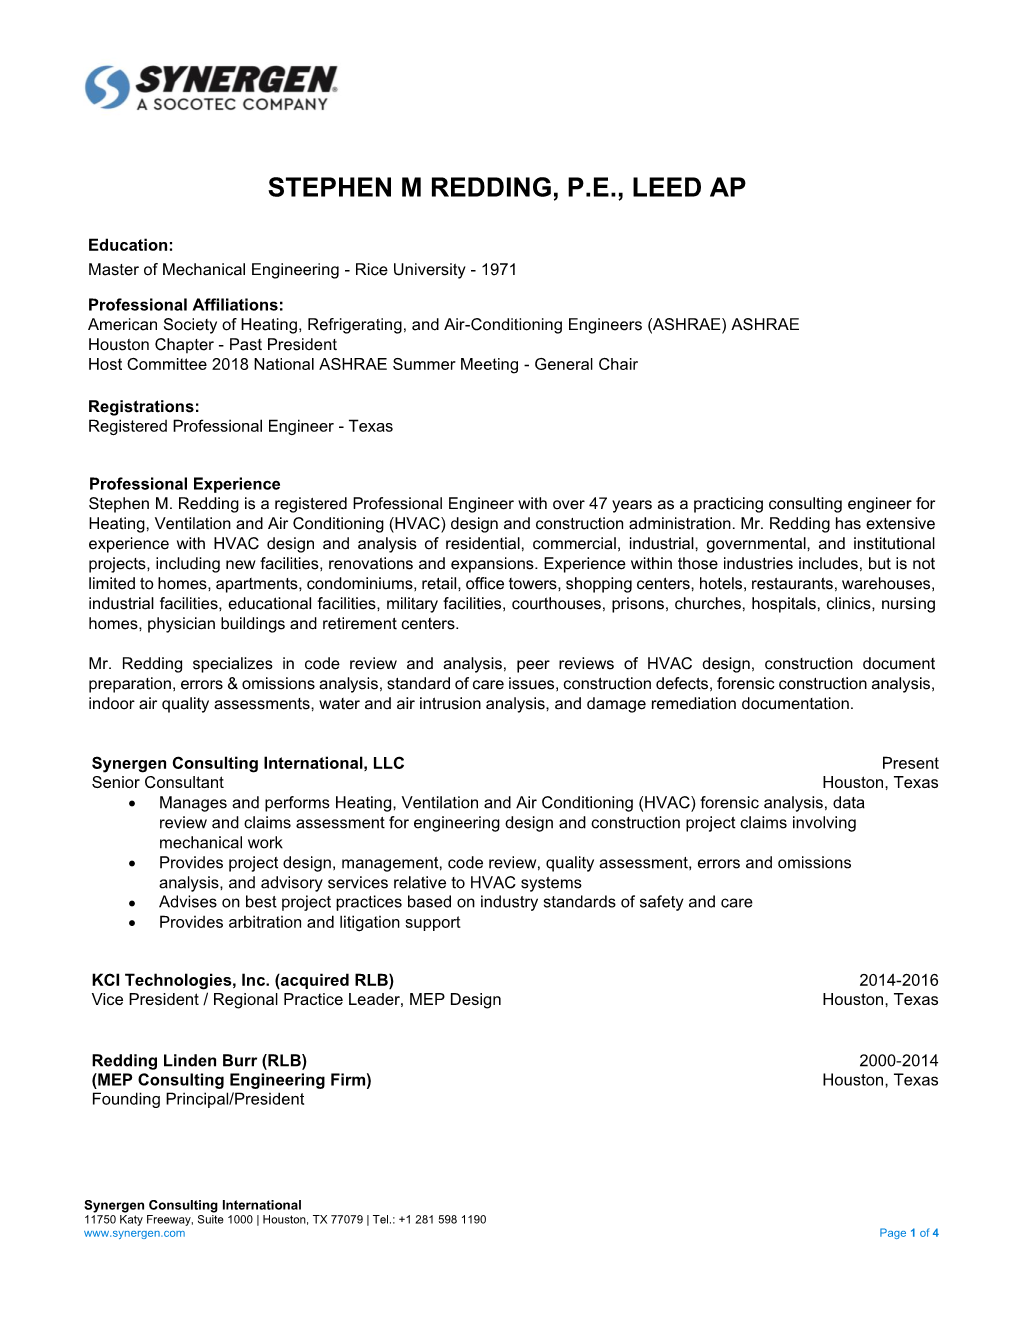 Stephen M Redding, Pe, Leed Ap